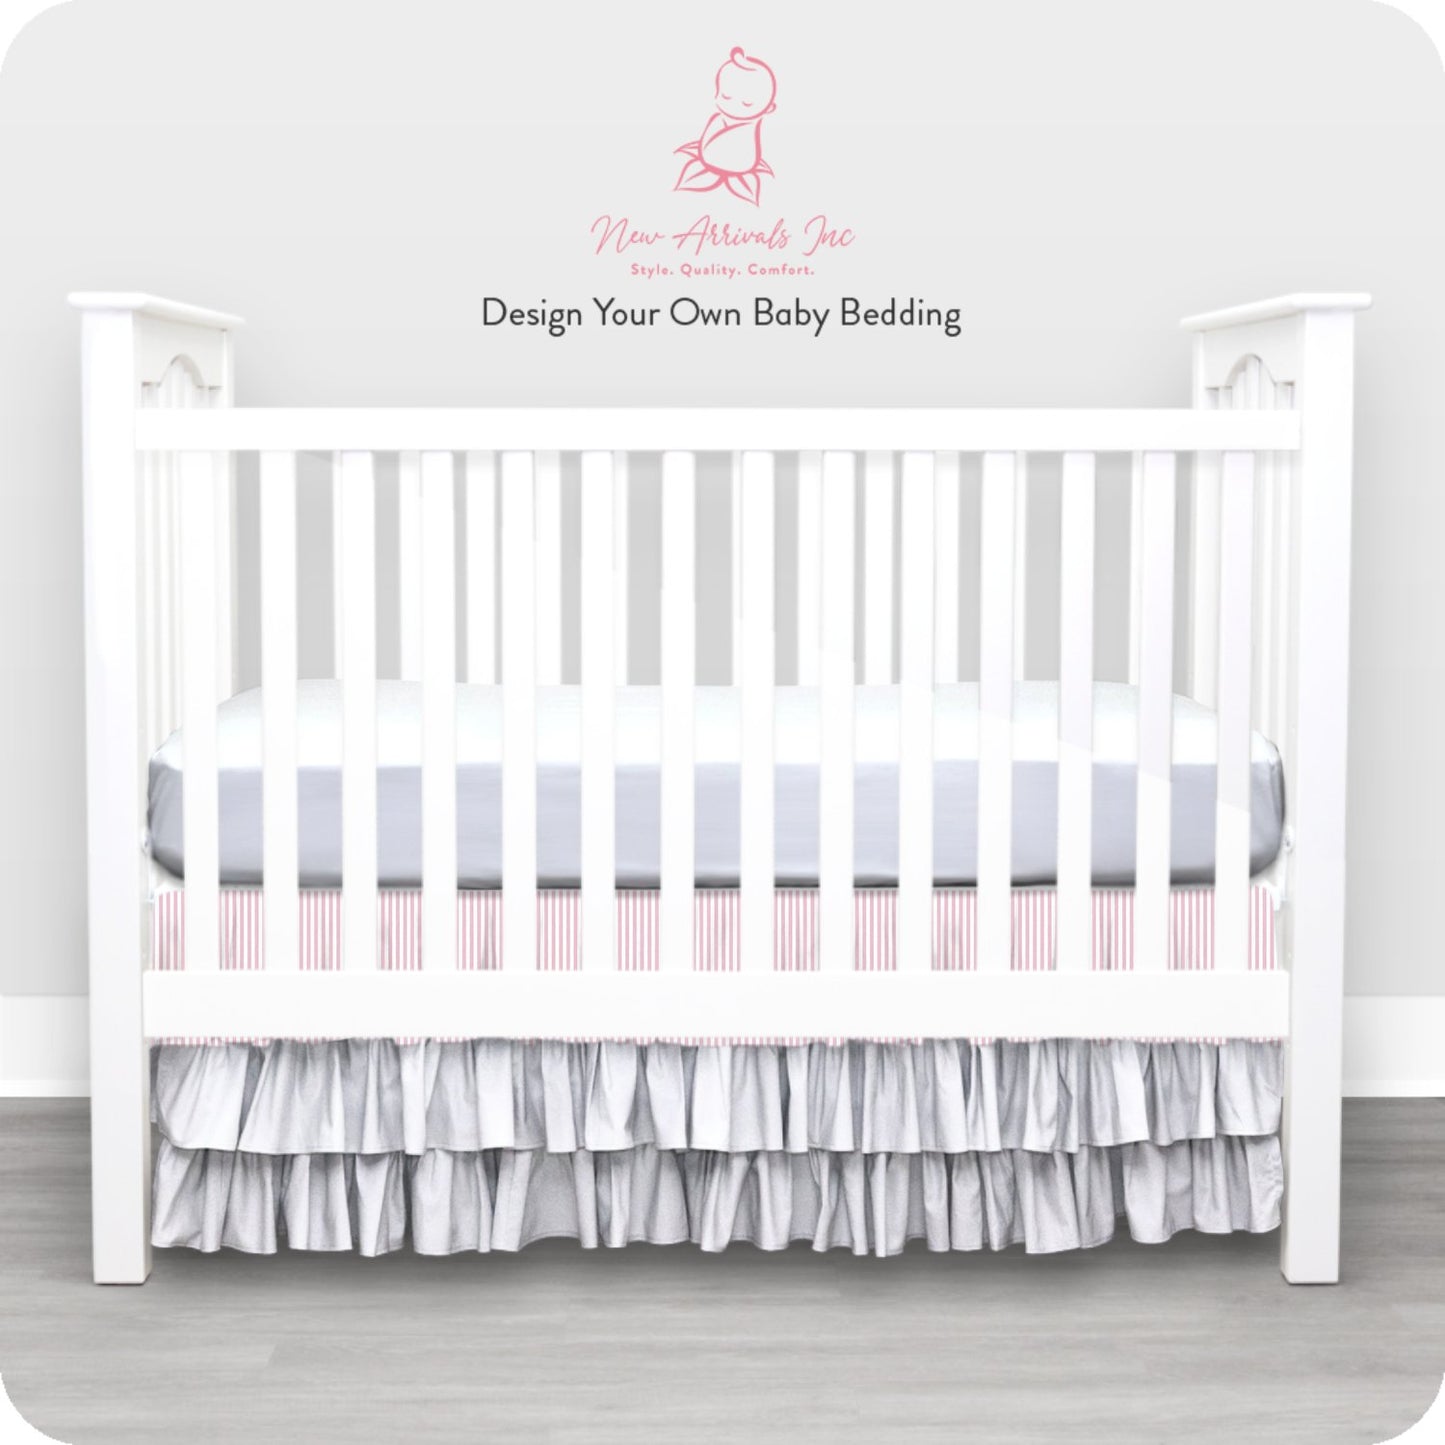 Design Your Own Baby Bedding - Crib Bedding - ID 6KNWhLx3NU-39dnTG4Cvg3jU - New Arrivals Inc